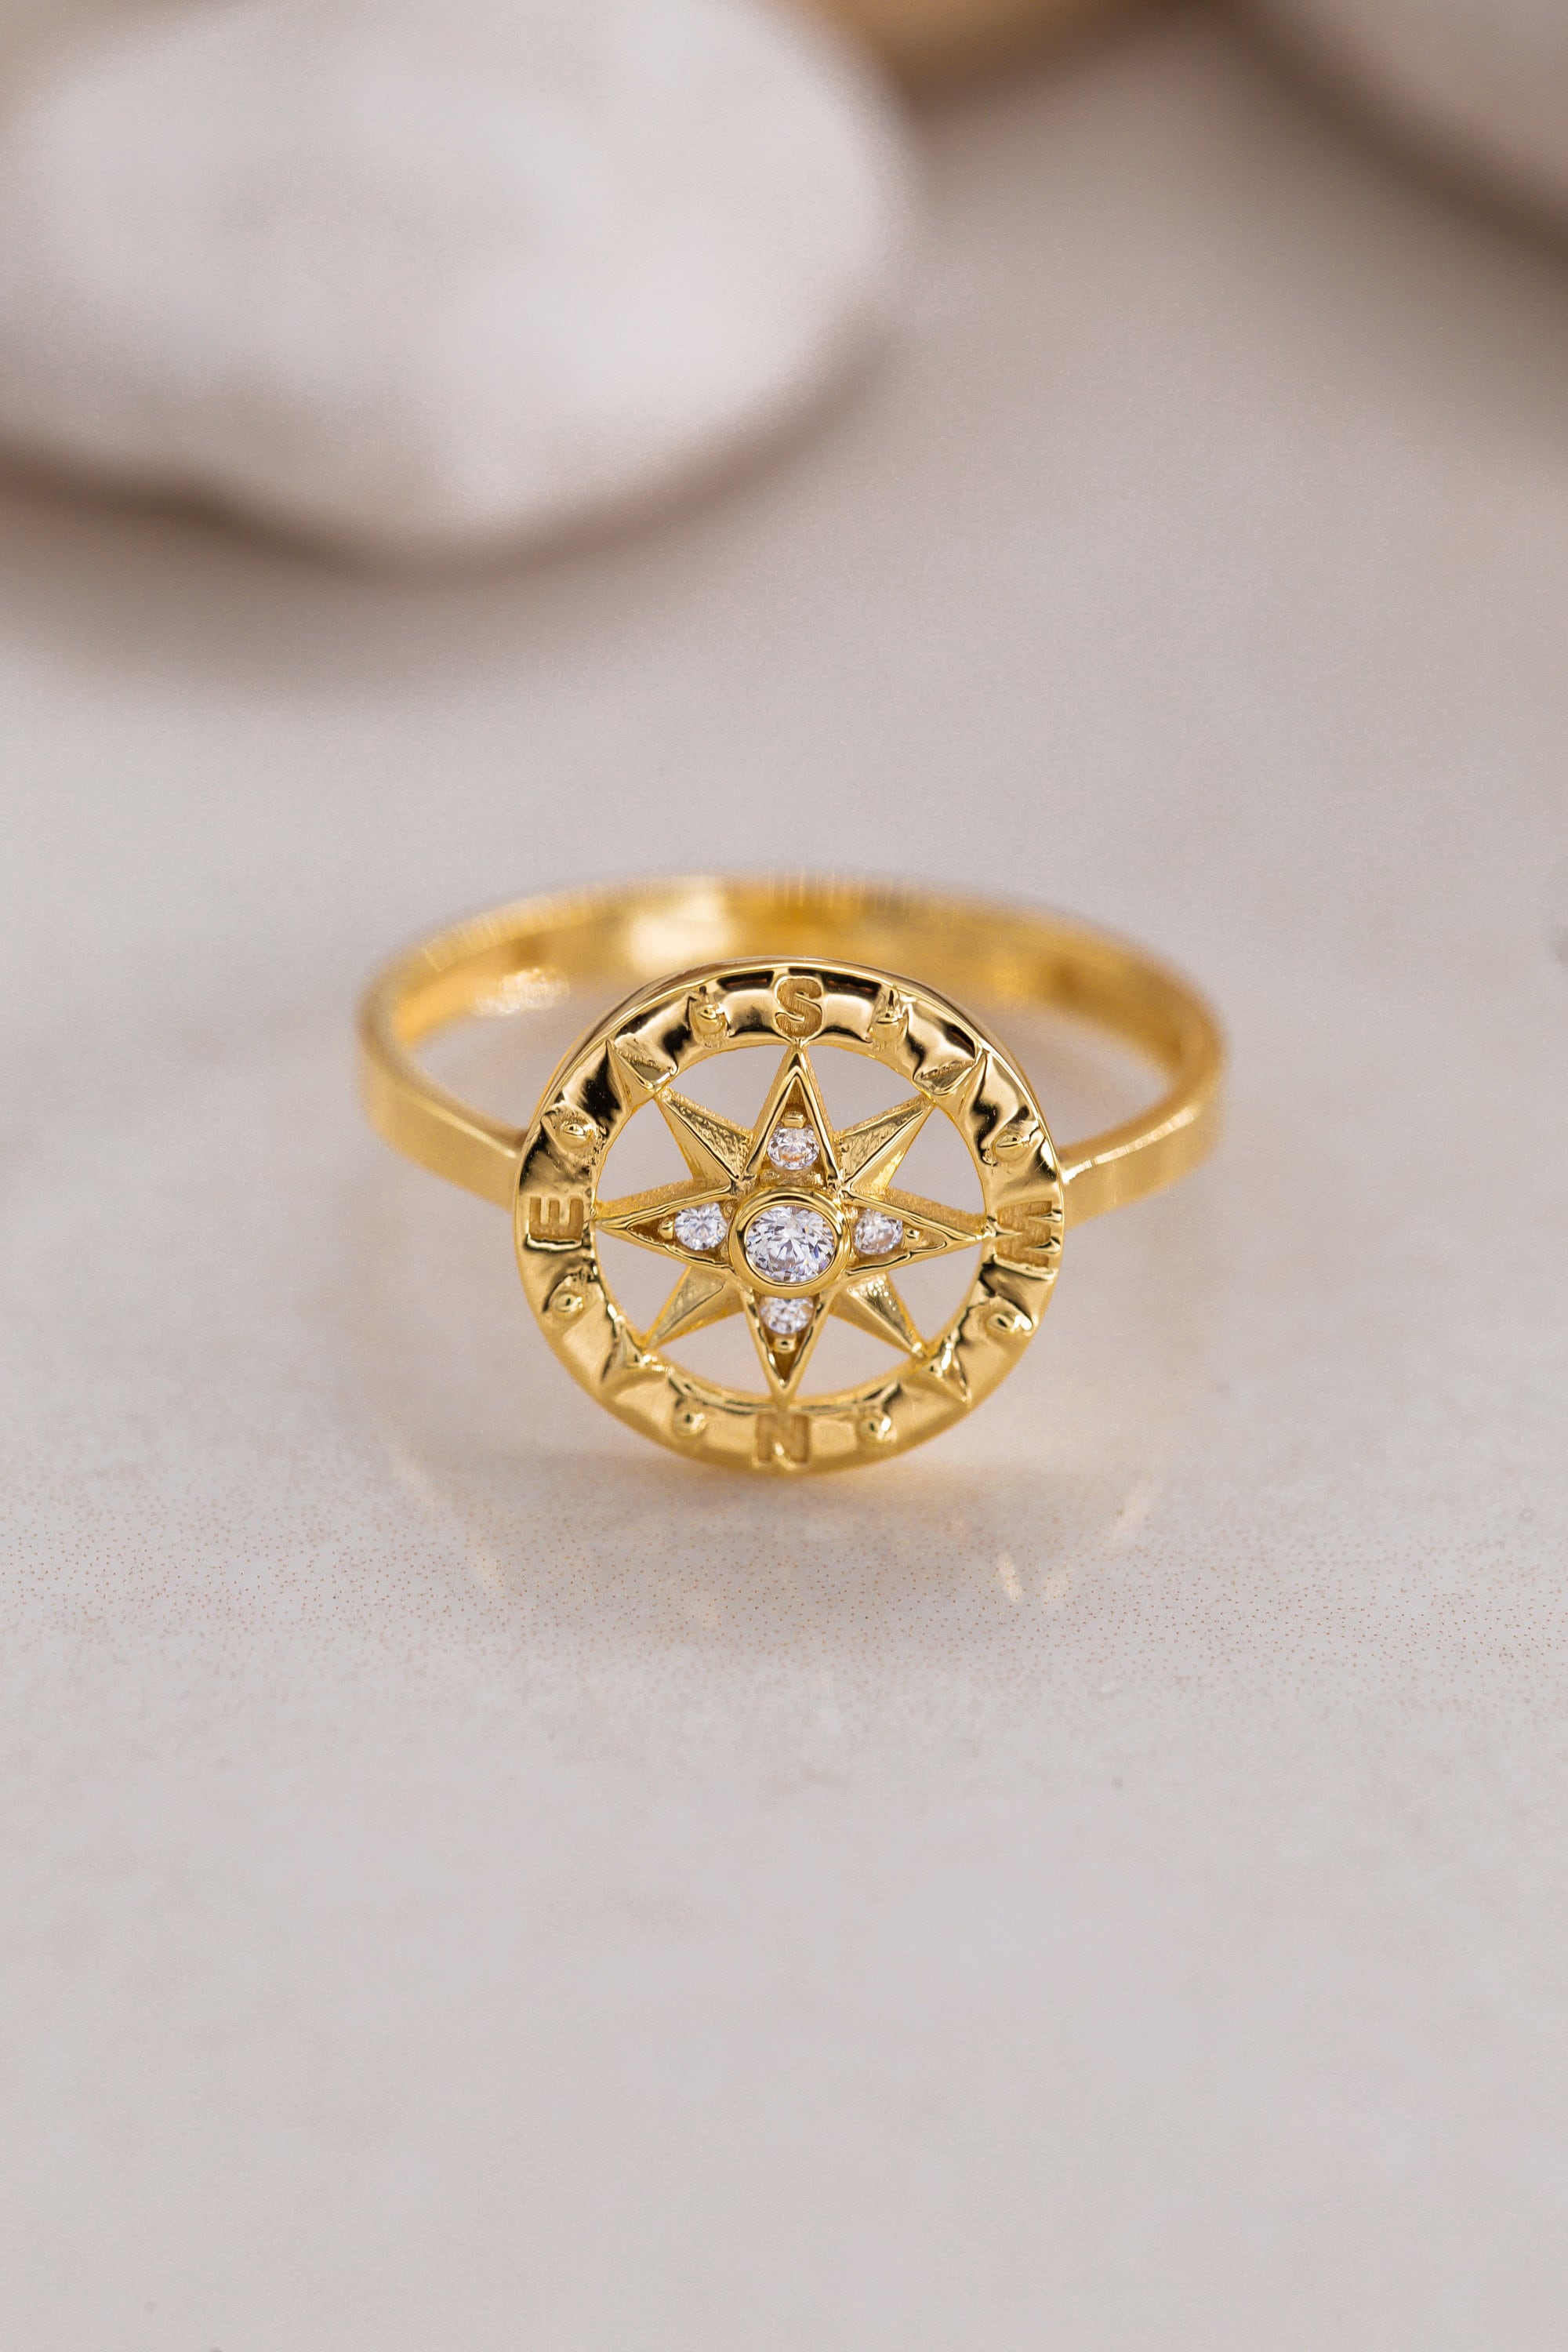 14K Golden North Star Ring - 925 Sterling Silver Celestial Jewelry, Starburst Ring Minimalist Design, Handcrafted Diamond Star Gold Ring